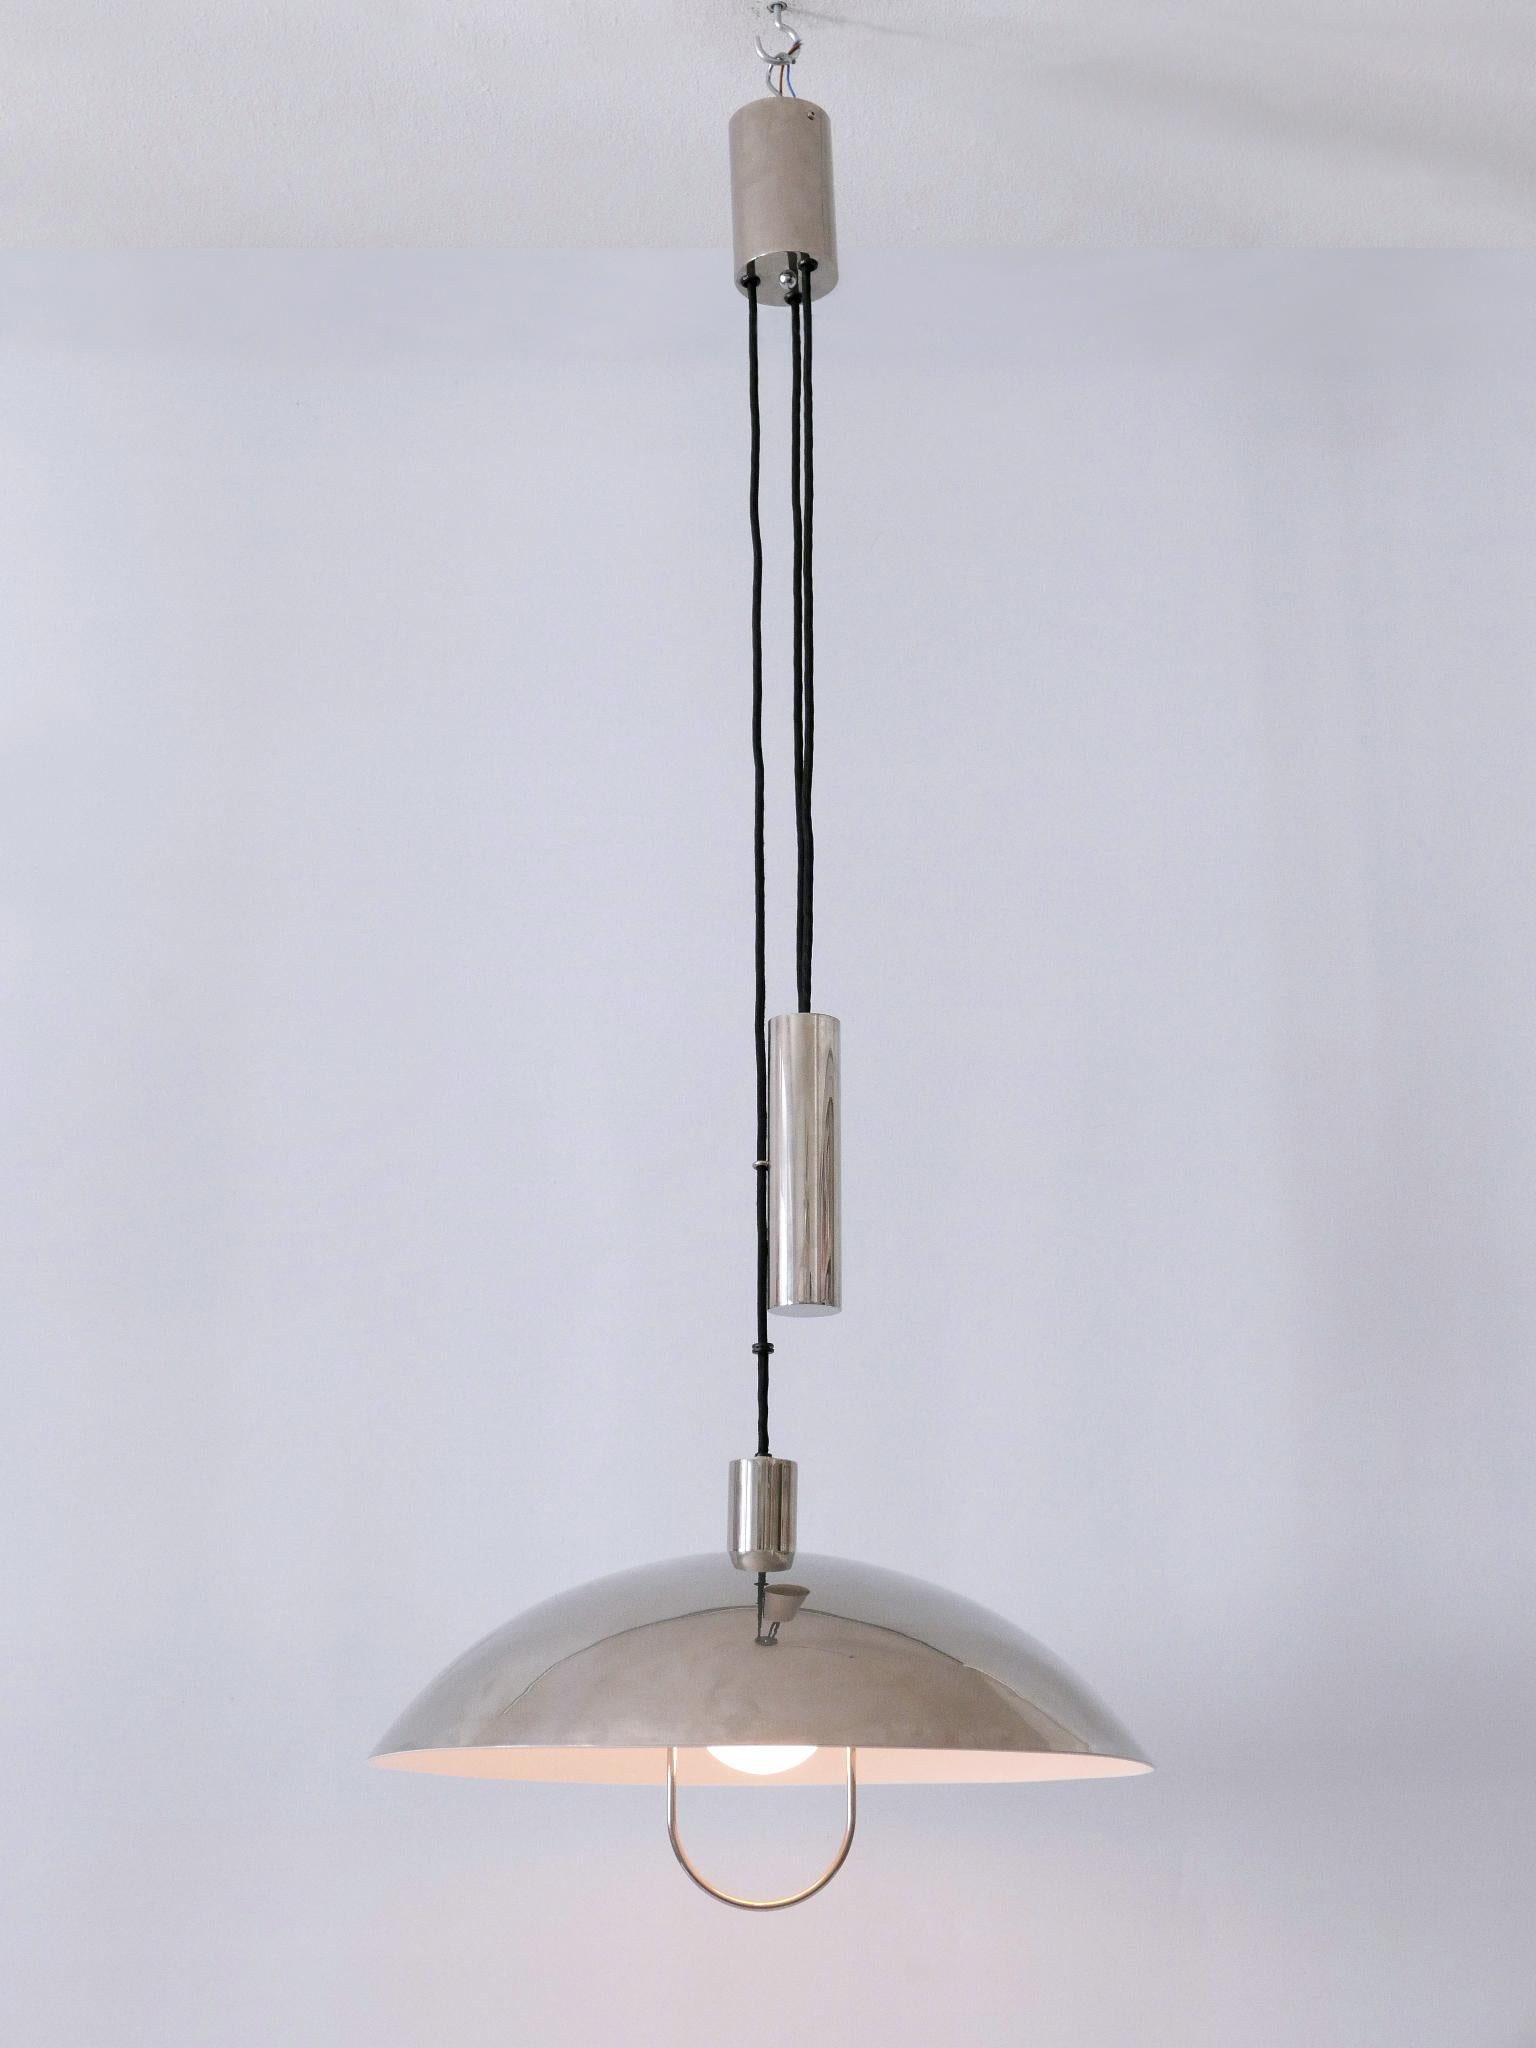 Early Tecnolumen Pendant Lamp 'Bauhaus HMB 25/500' by Marianne Brandt 1980s For Sale 4